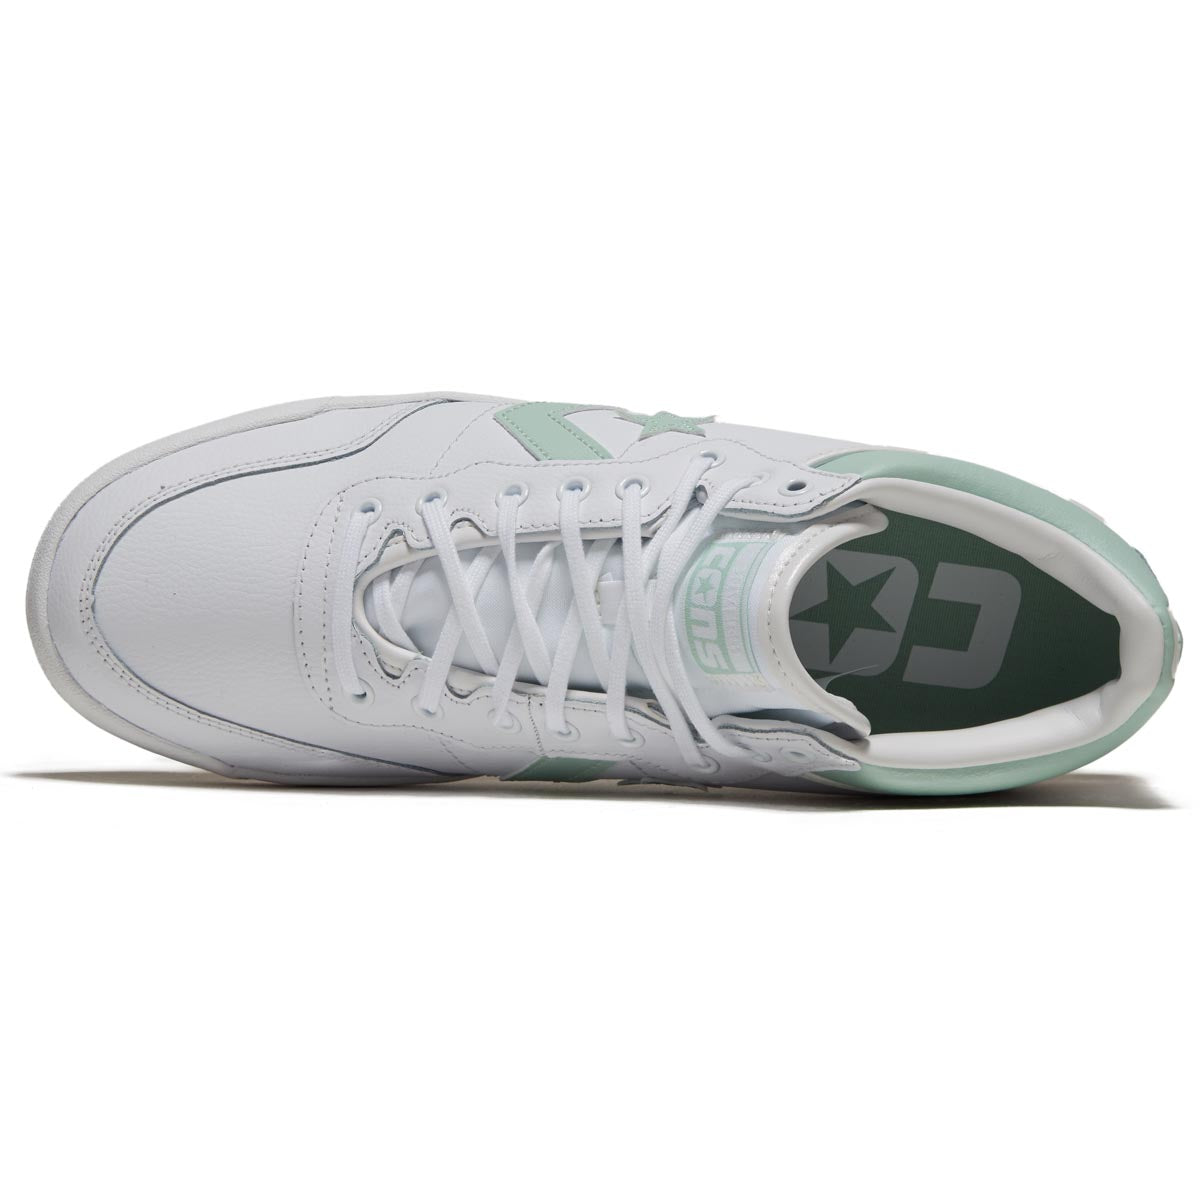 Converse Fastbreak Pro Leather Mid Shoes - White/Sticky Aloe/Gum Honey image 3